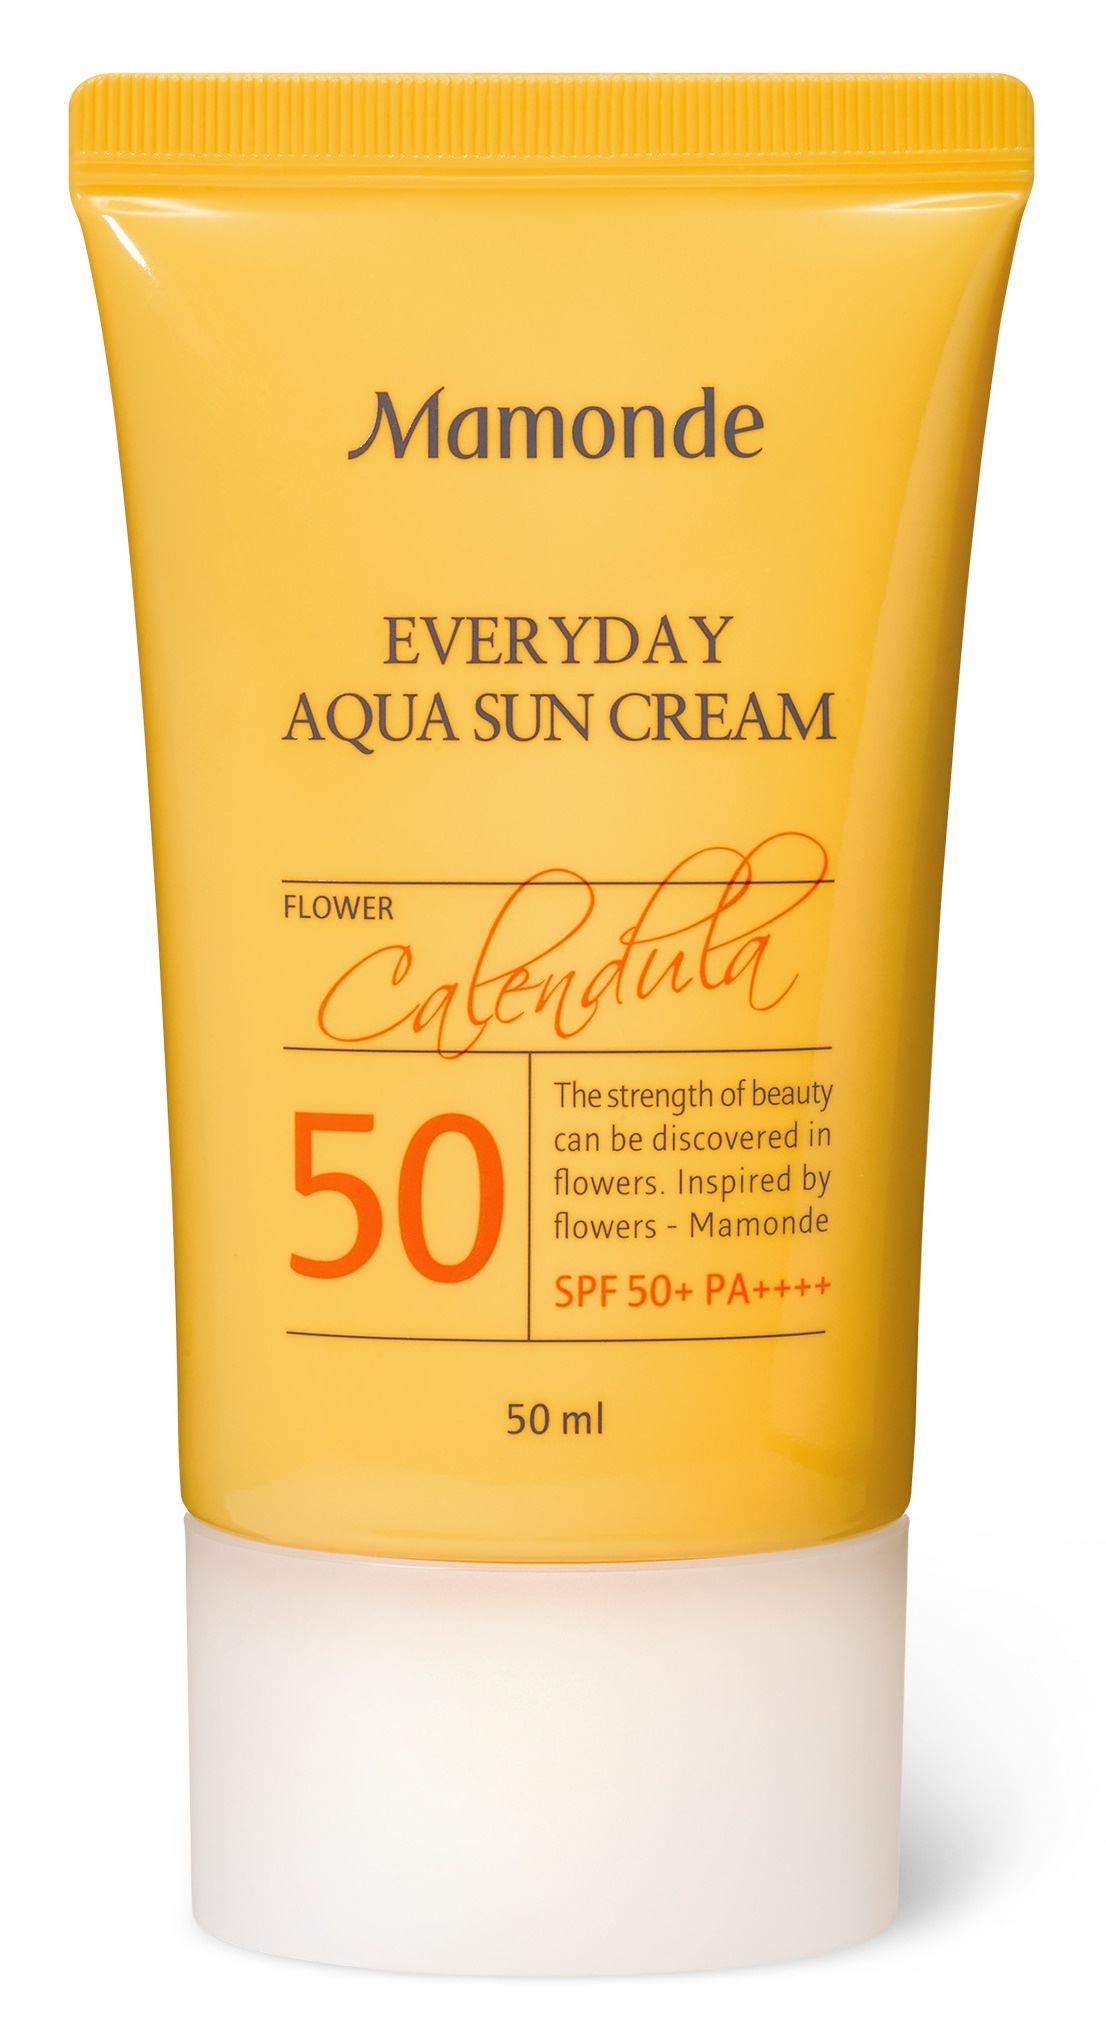 Mamonde Everyday Aqua Sun Cream SPF 50+